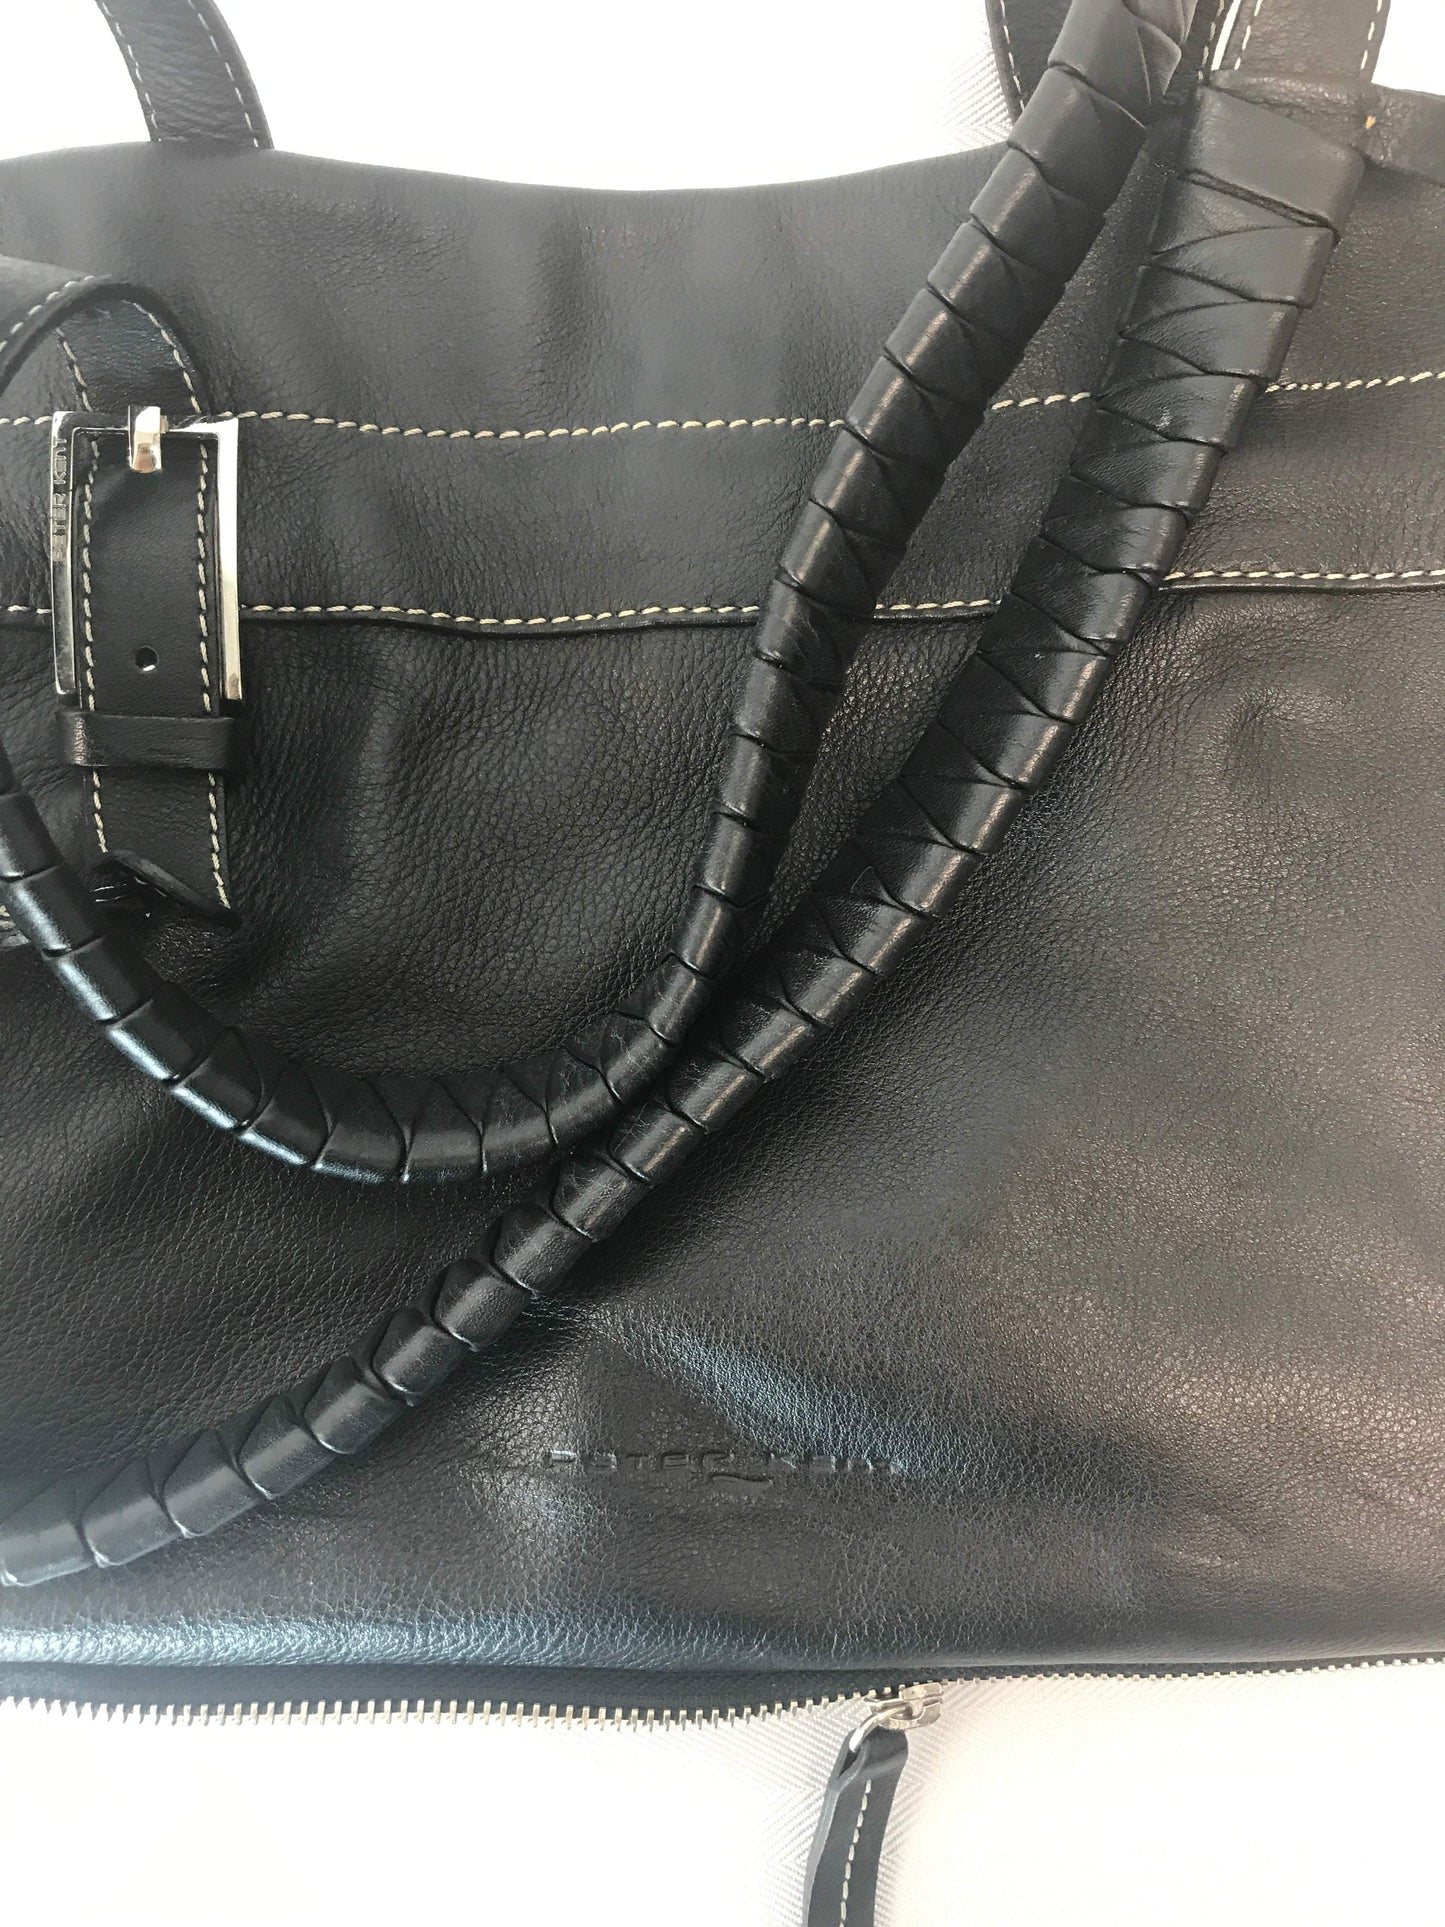 Peter Kent Medium Black Leather Handbag